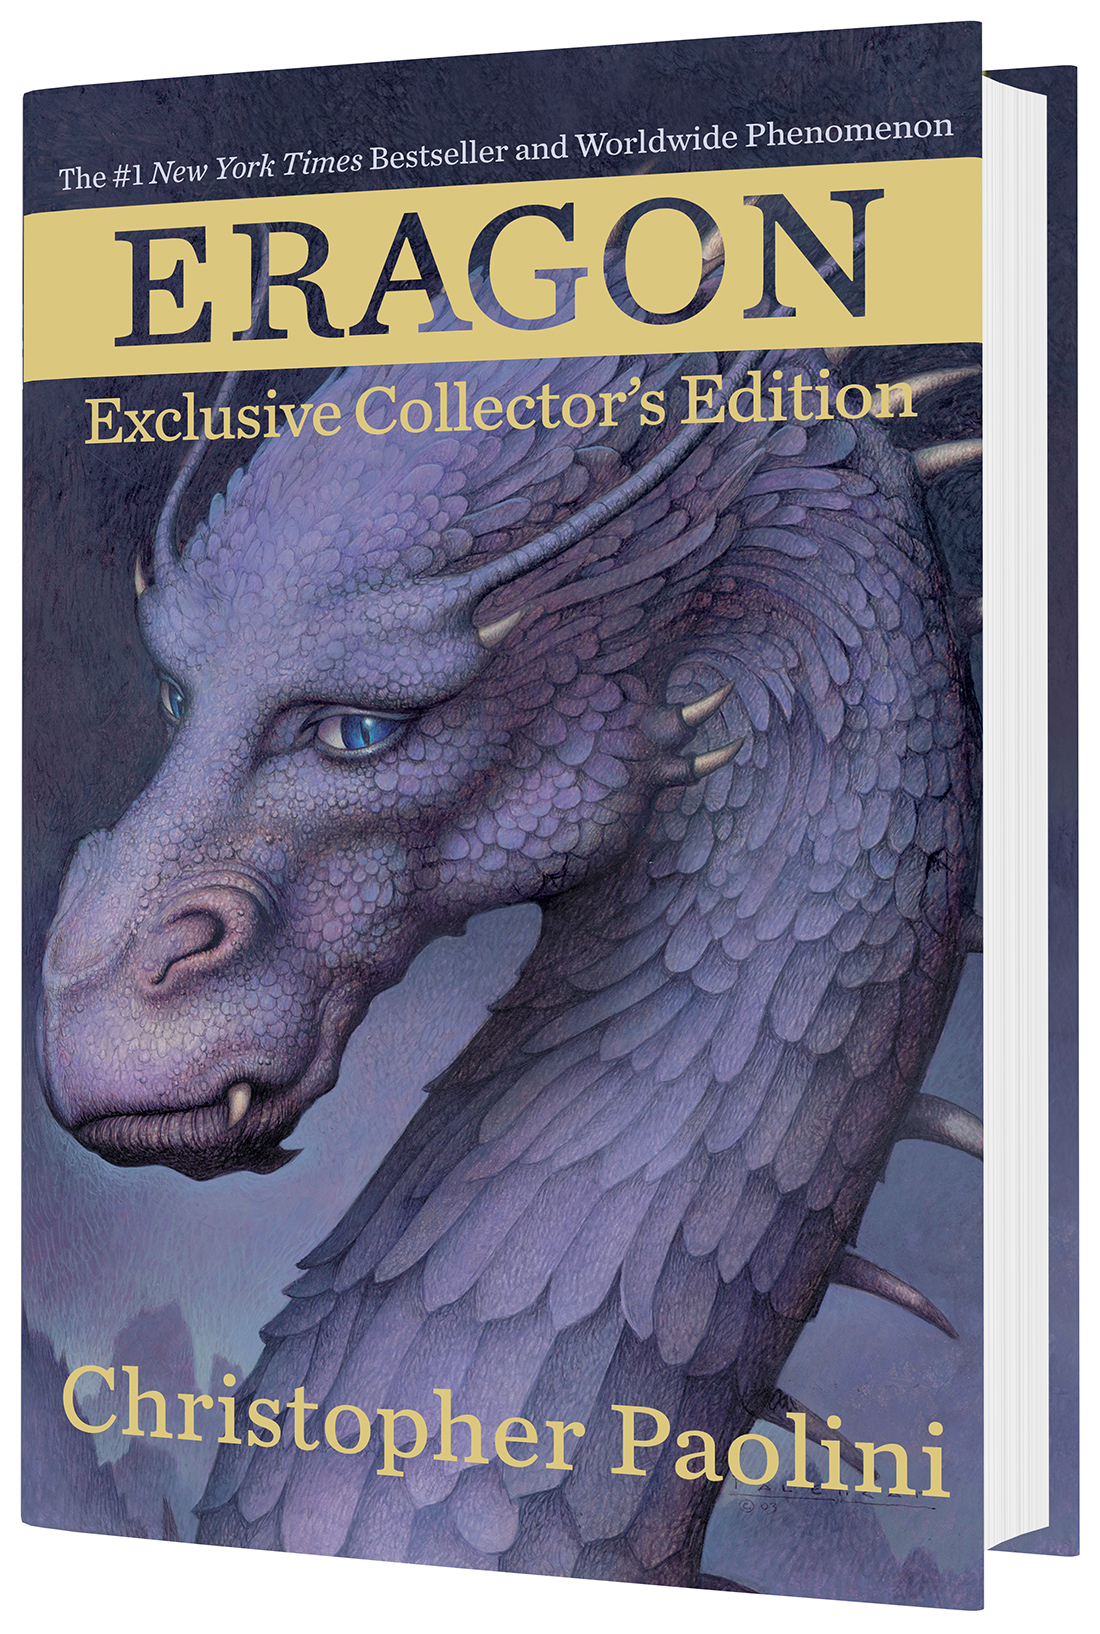 Eragon - Barnes and Noble Exclusive Collector's Edition